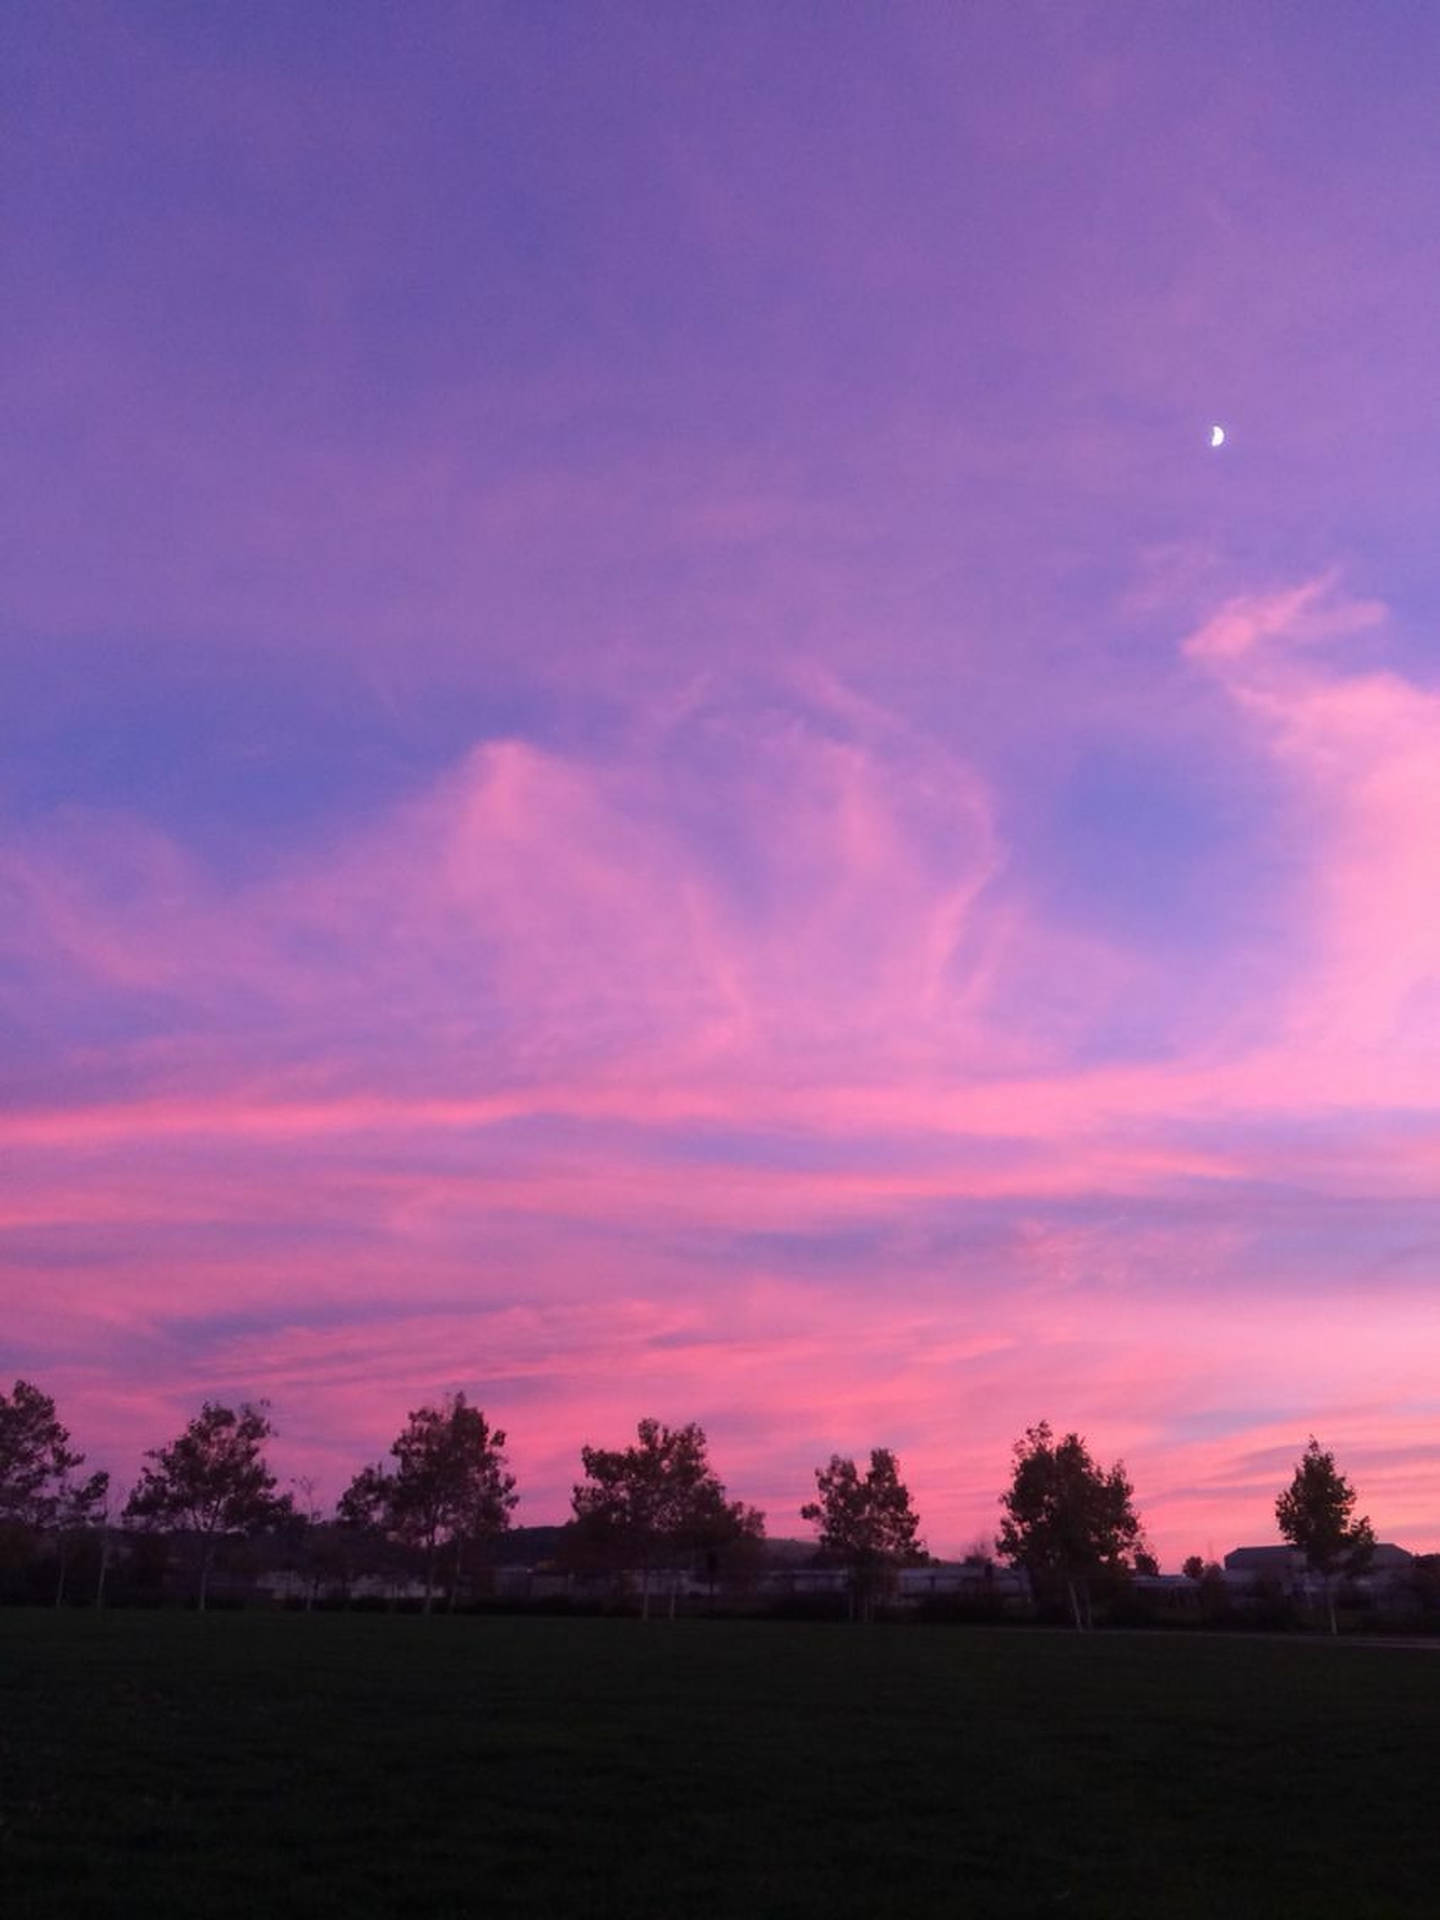 Download Pink Aesthetic Sunset Sky Wallpaper | Wallpapers.com